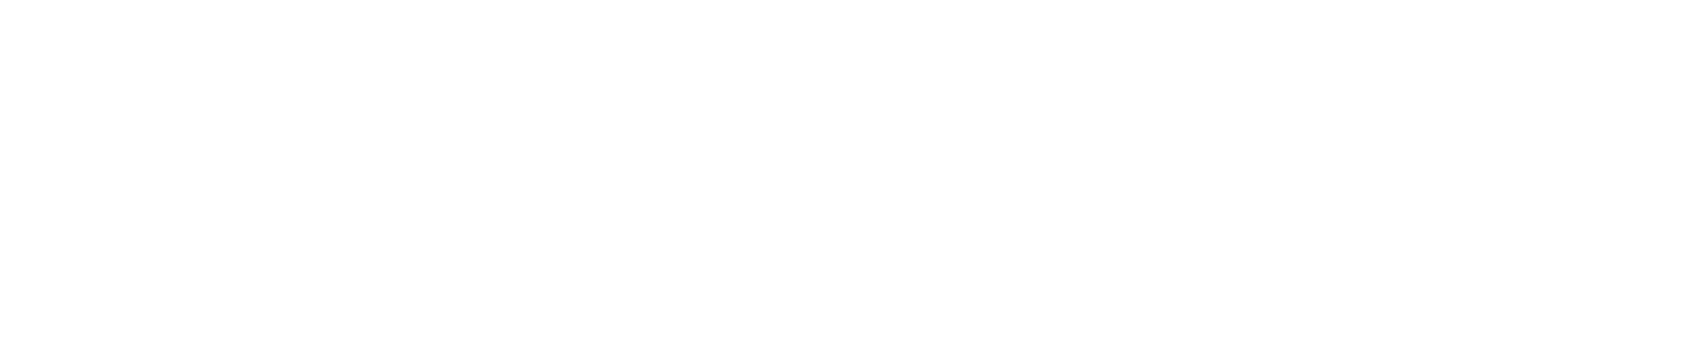 Ben McGarry Photography Logo in white